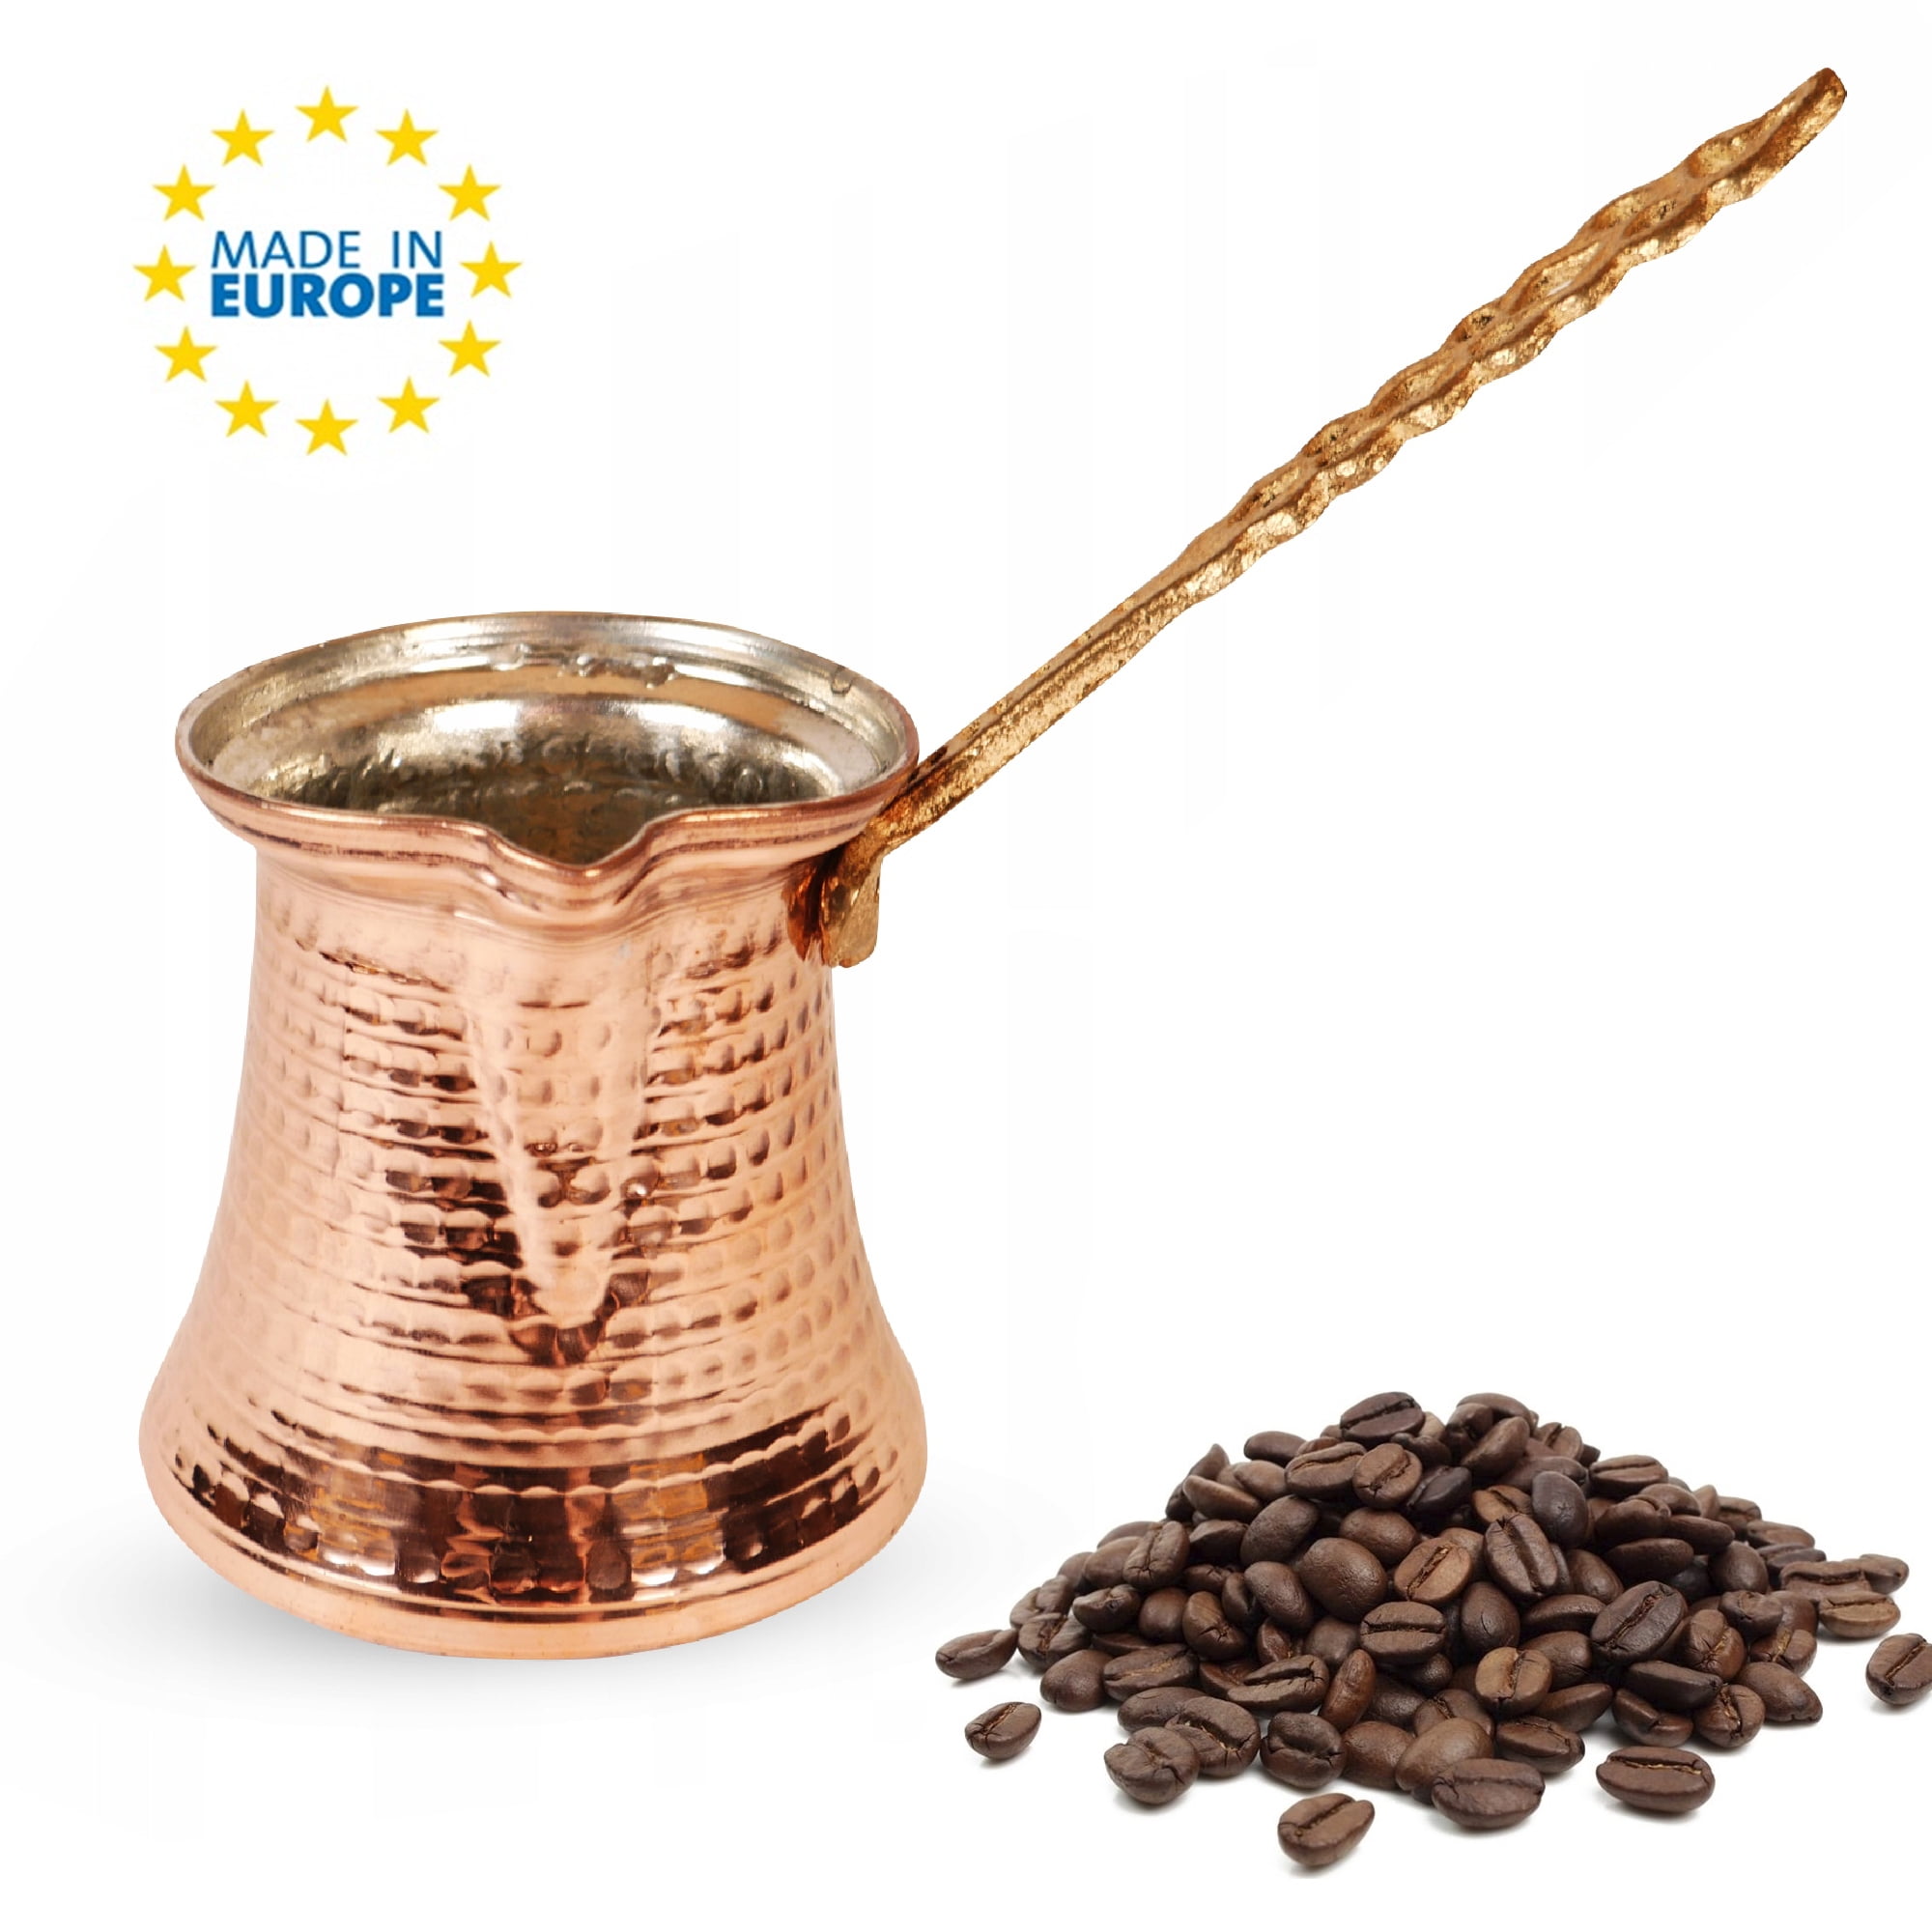 Turkish Brass Coffee Pot